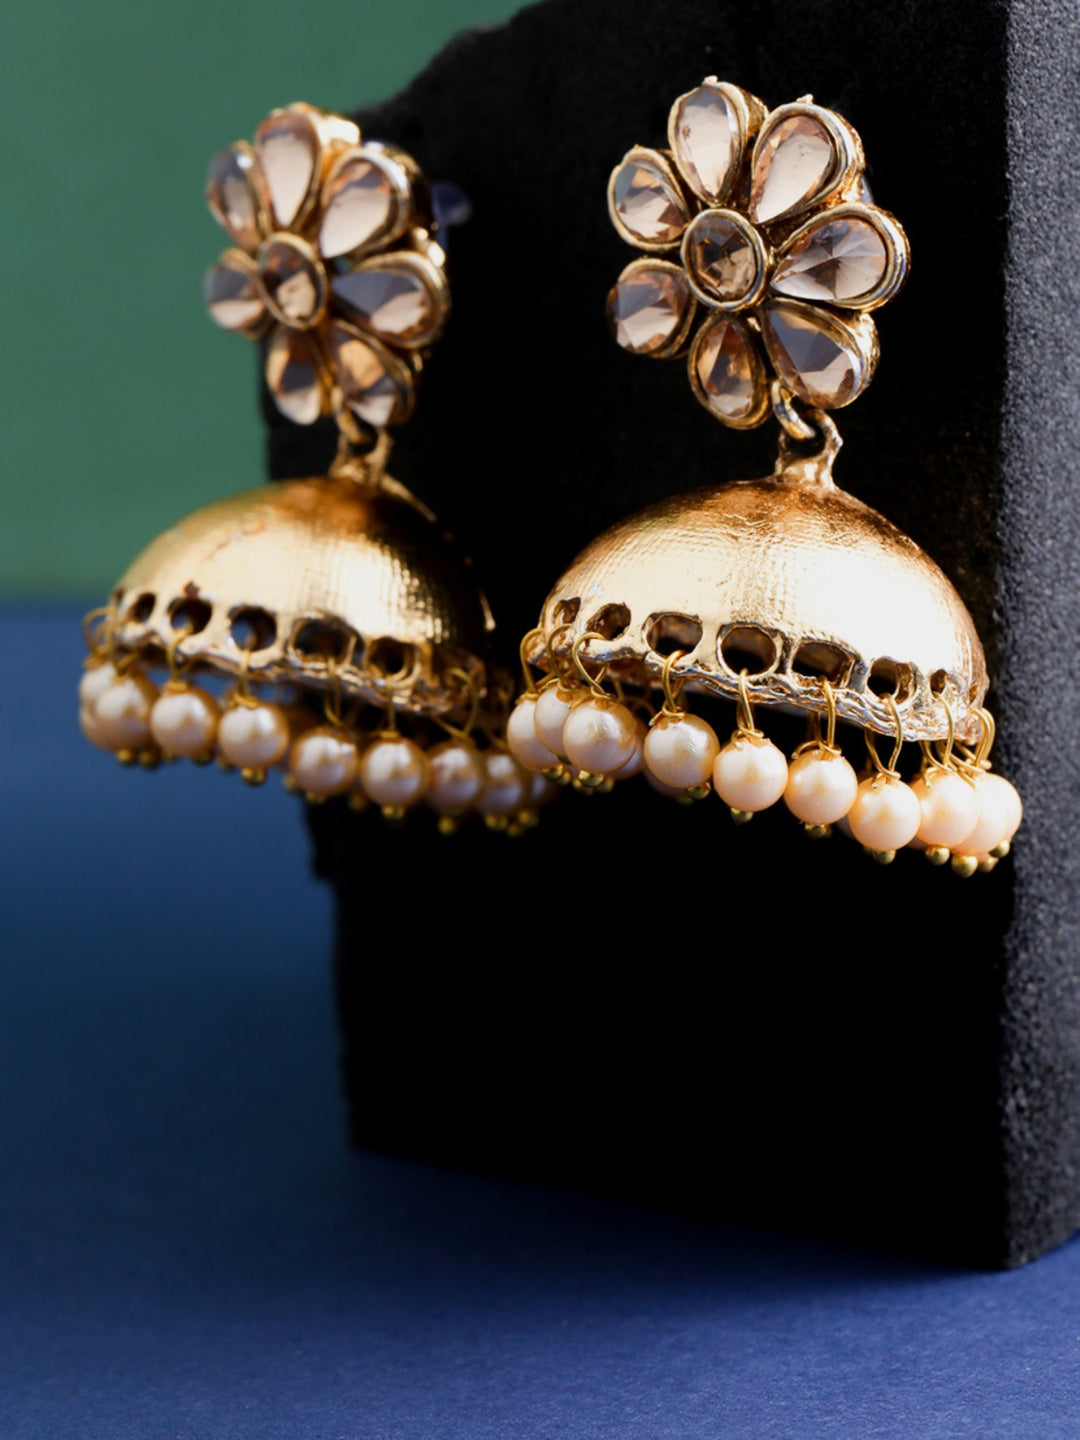 Designer Floral Gold Plated Stud Jhumki Earrings For Women And Girls